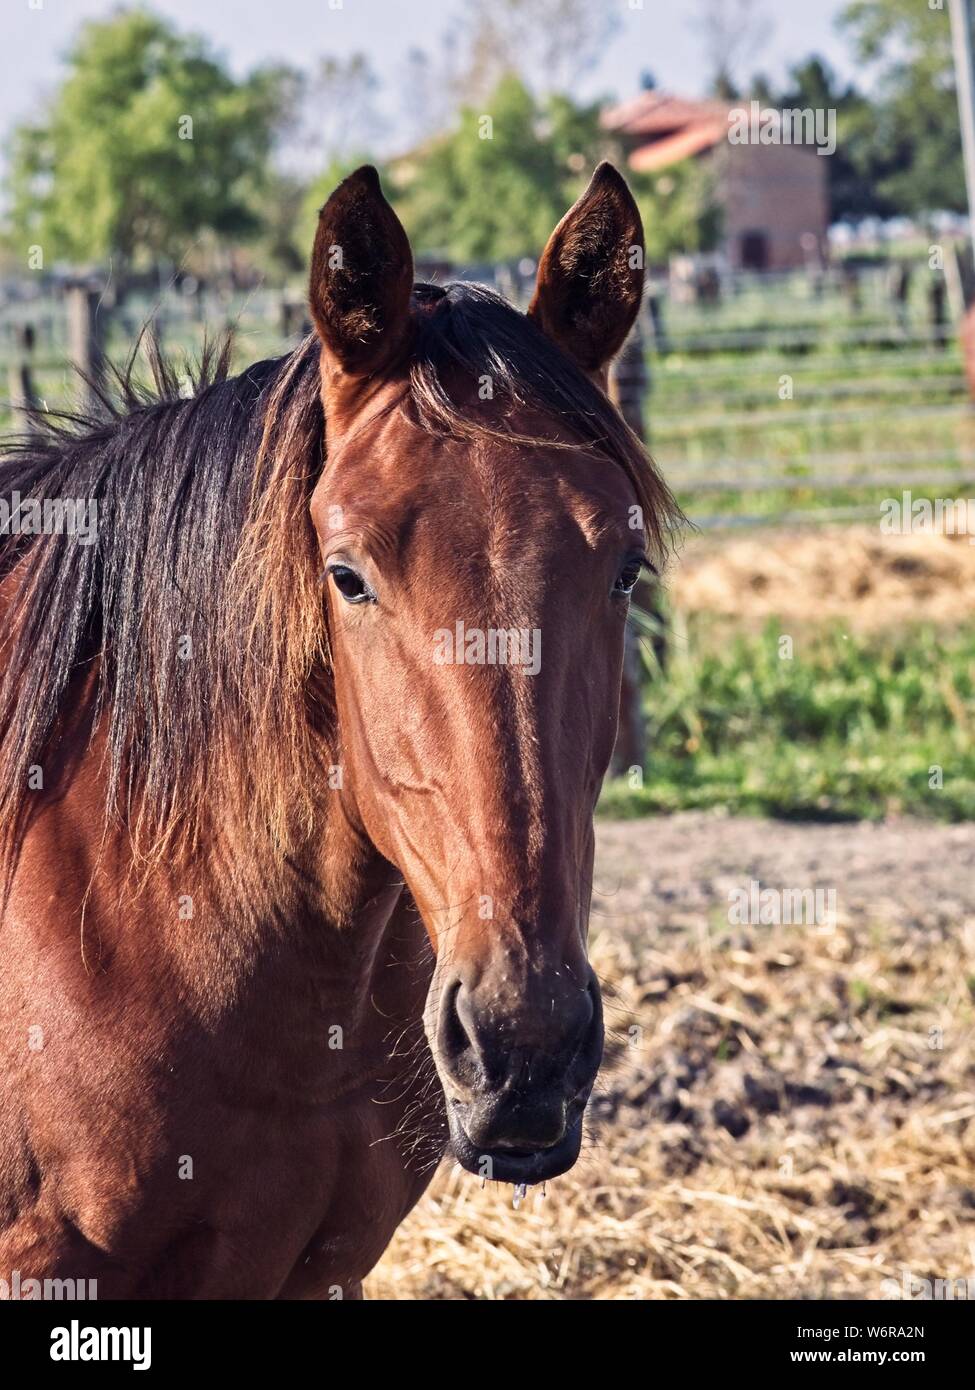 Closeup portrait of a beautiful bay horse Stock Photo